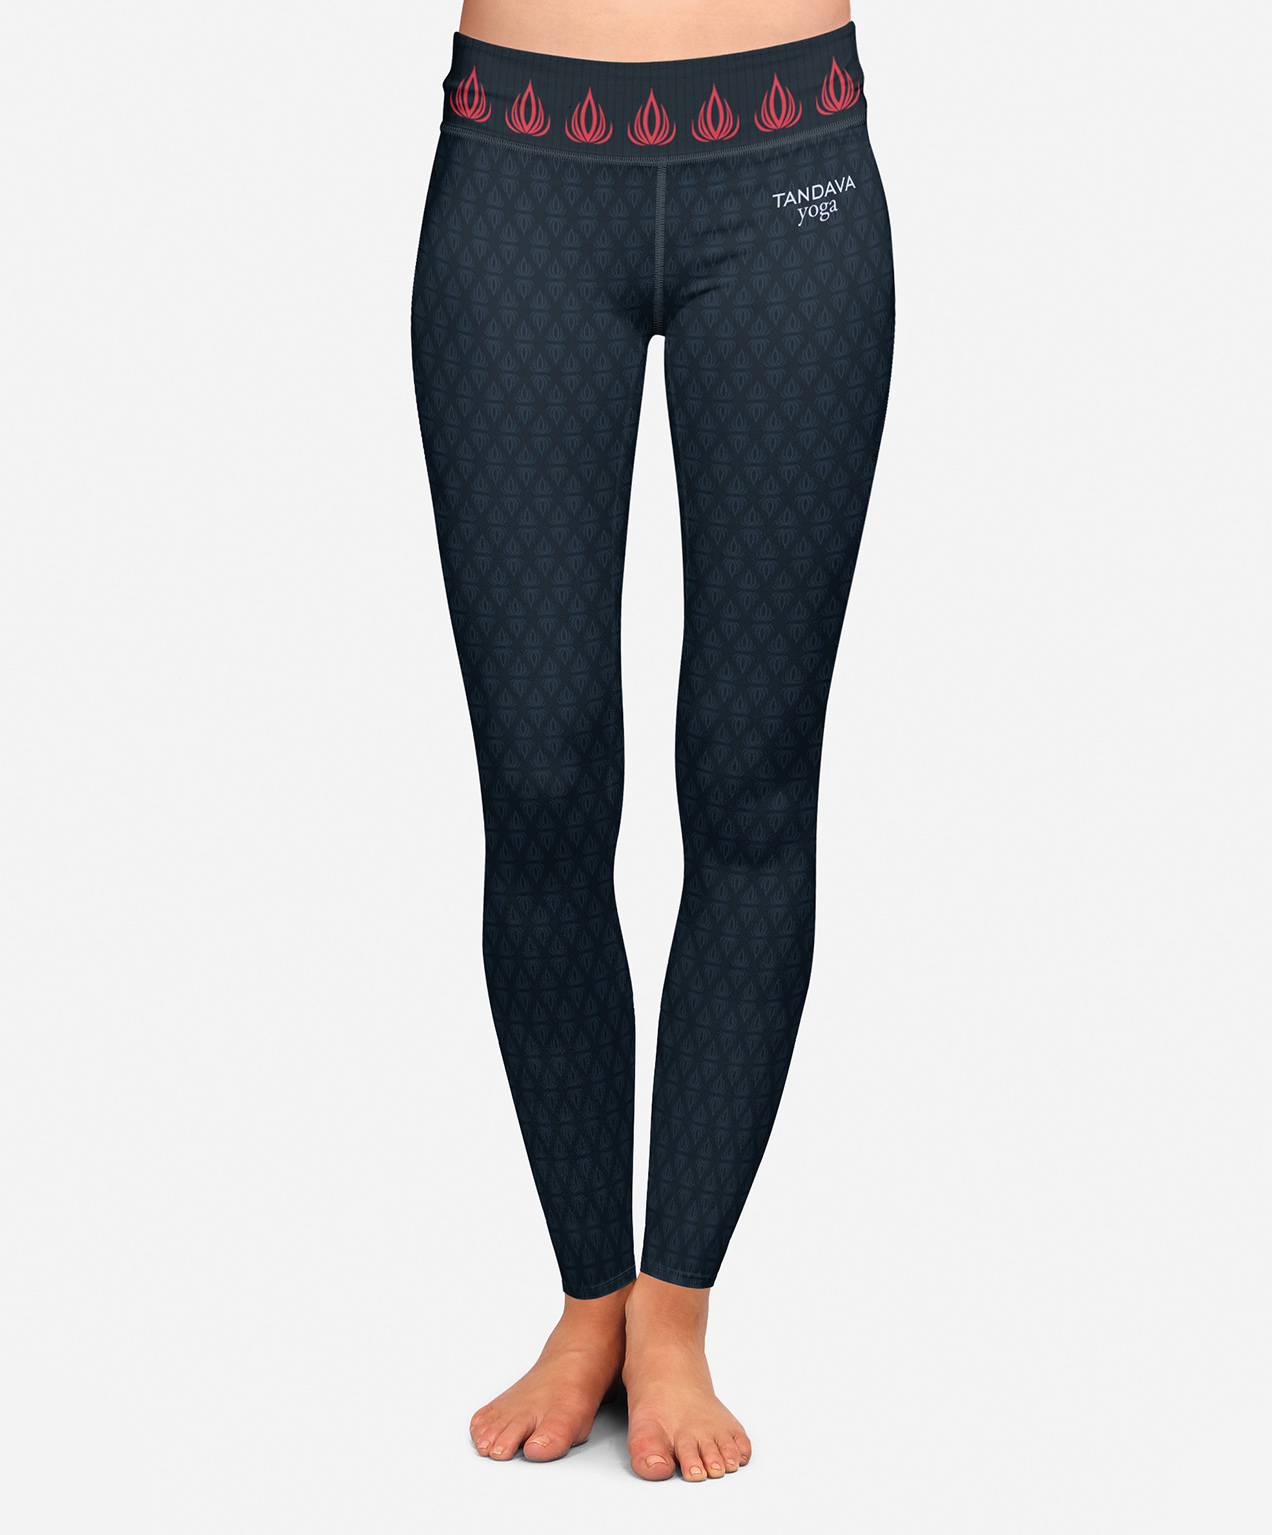 jamie langevin branding design tandava yoga apparel leggings 2